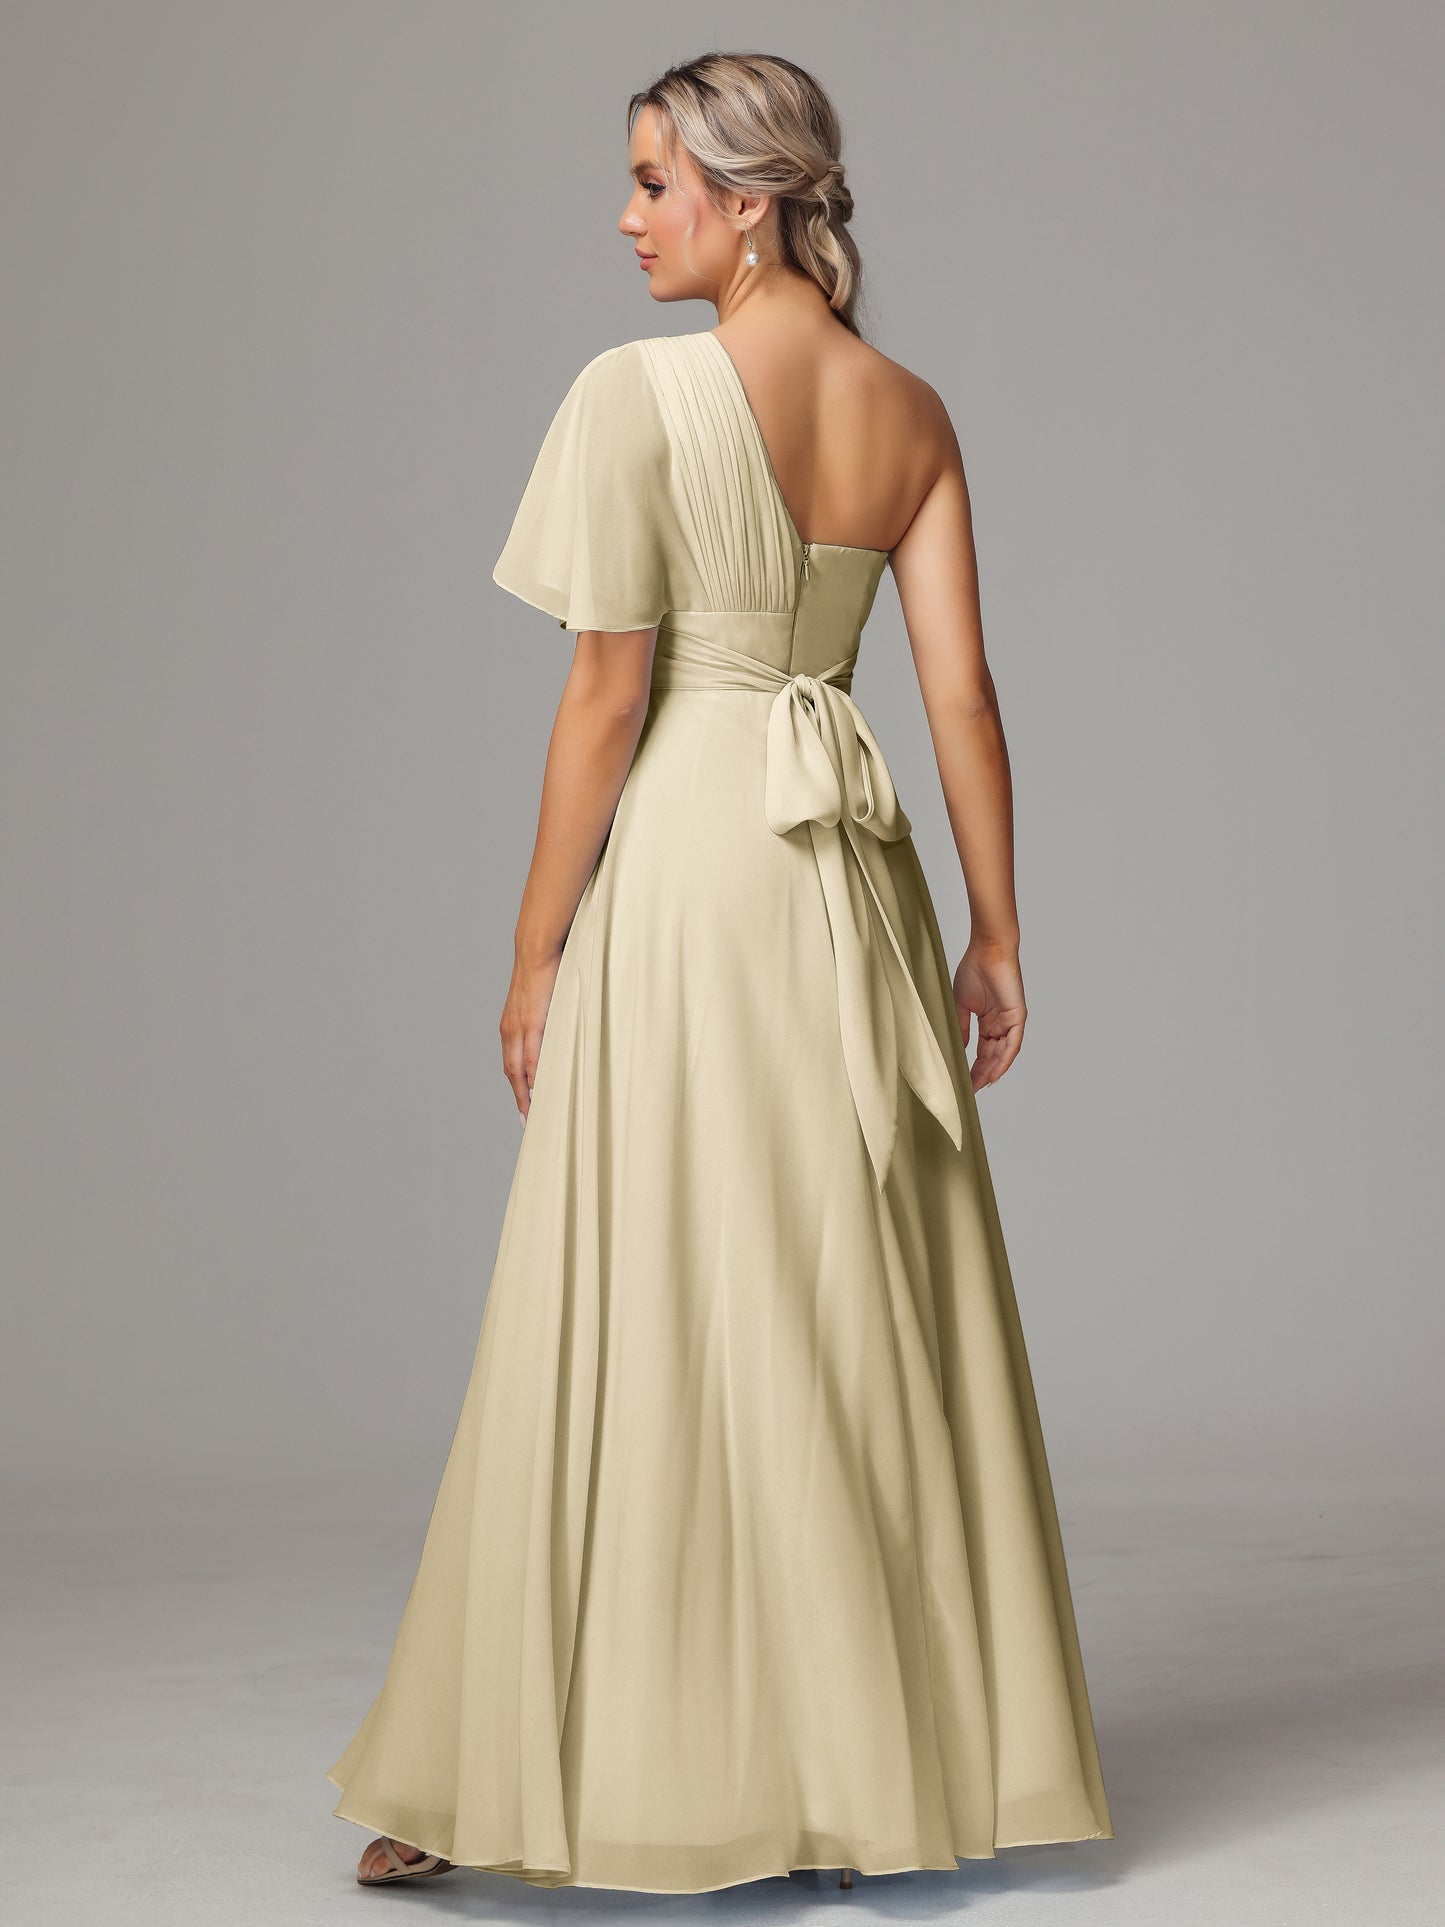 One Shoulder Chiffon Bridesmaid Dresses With Slit